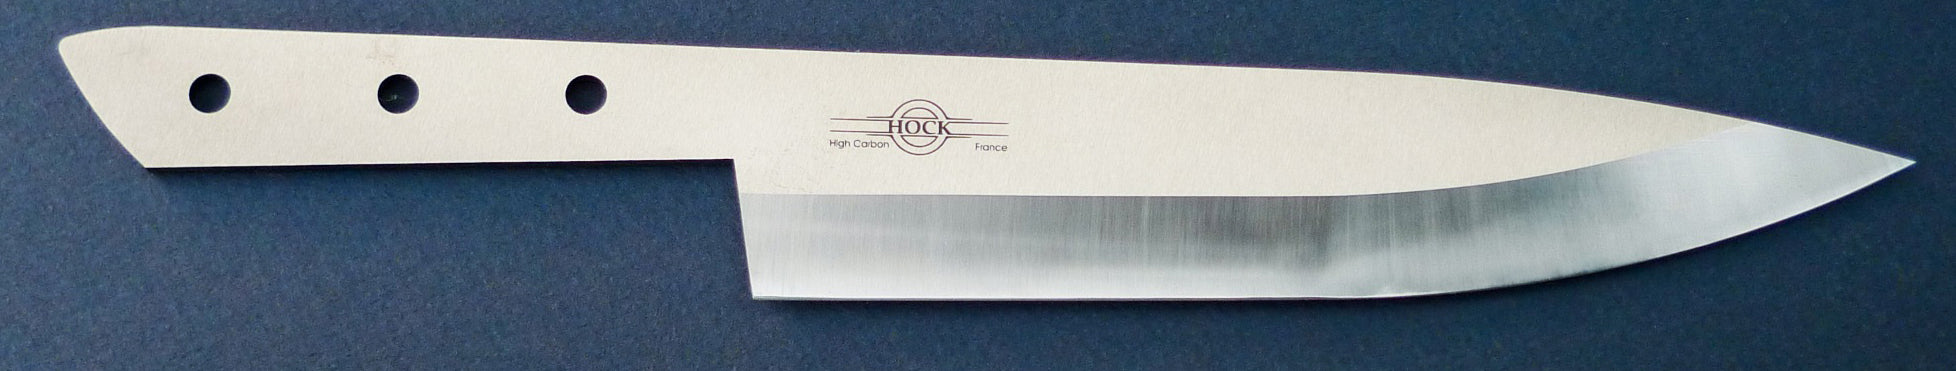 Hock 3.5 Paring Knife - High Carbon Steel - France — WoodWorld of